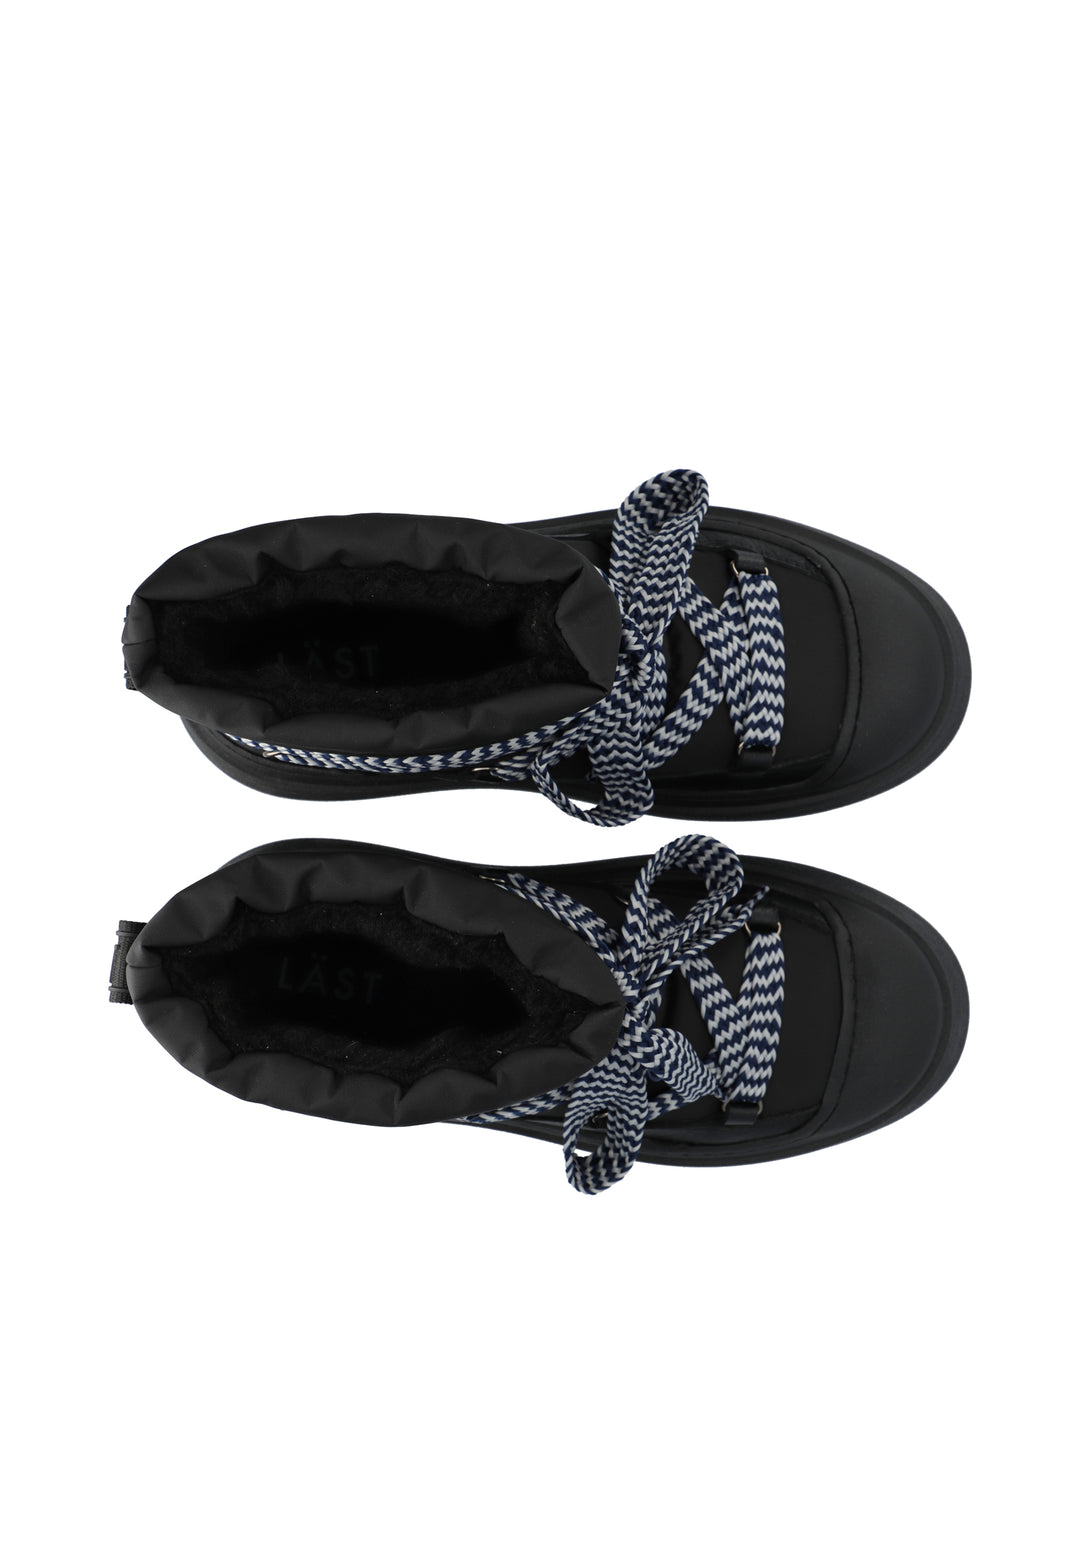 LÄST Snowboot - Leather/Textile - Black, Warm Lining*Snowboot - Leather/Textile - Black, Warm Lining Ankle Boots Black